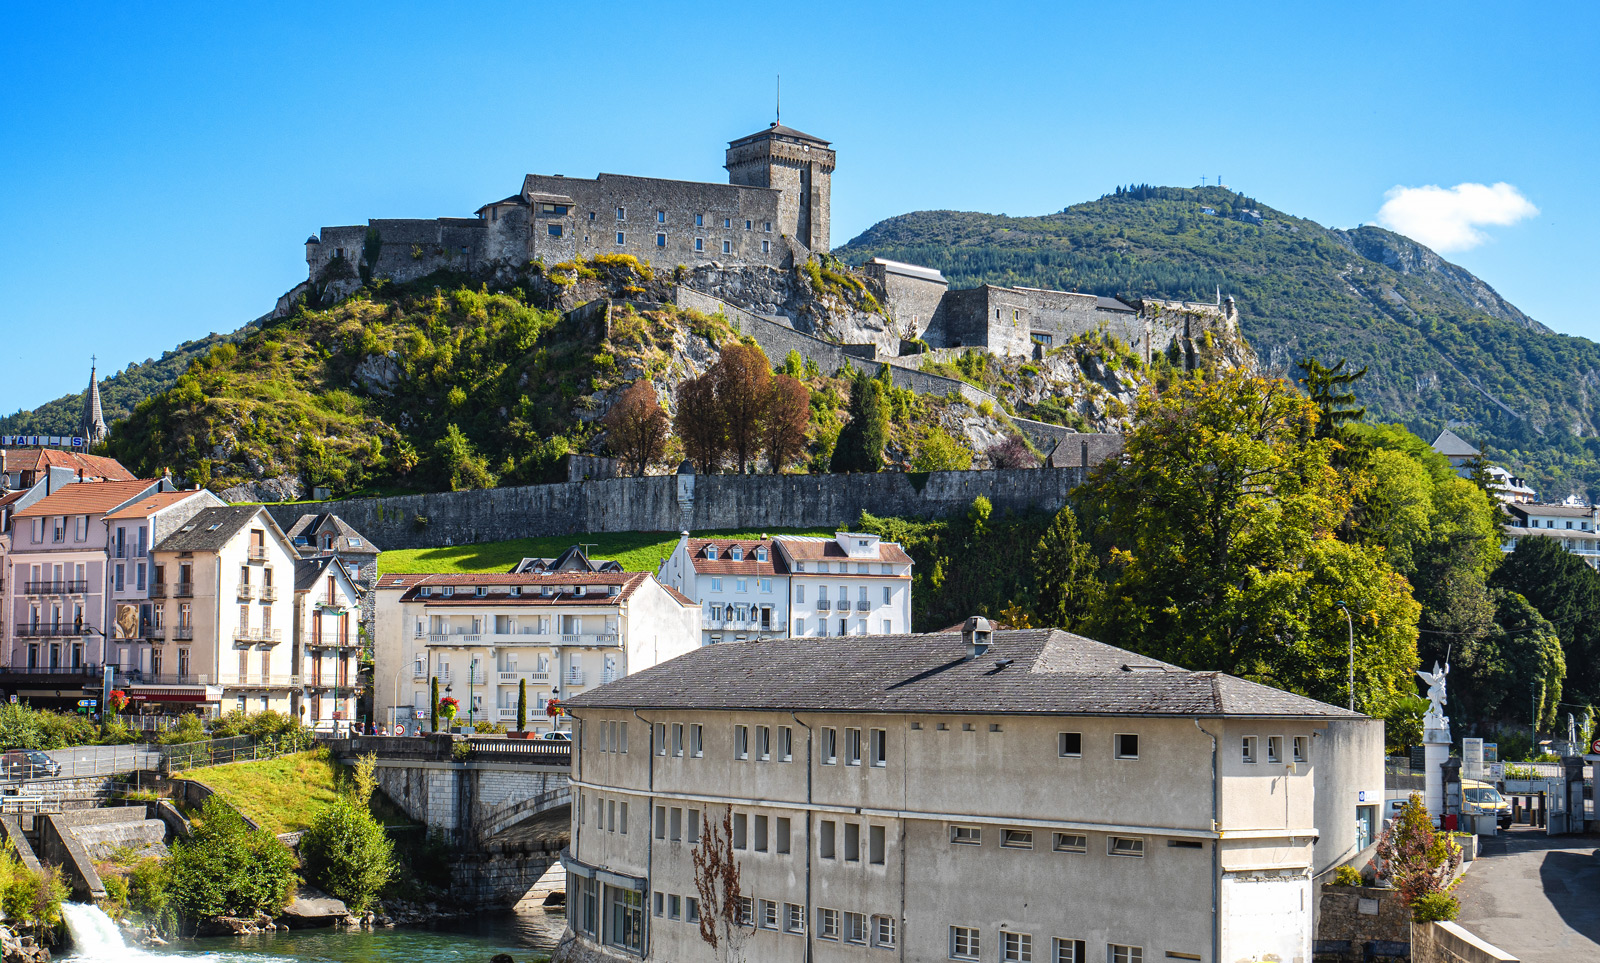 The castles of the Hautes-Pyrénées